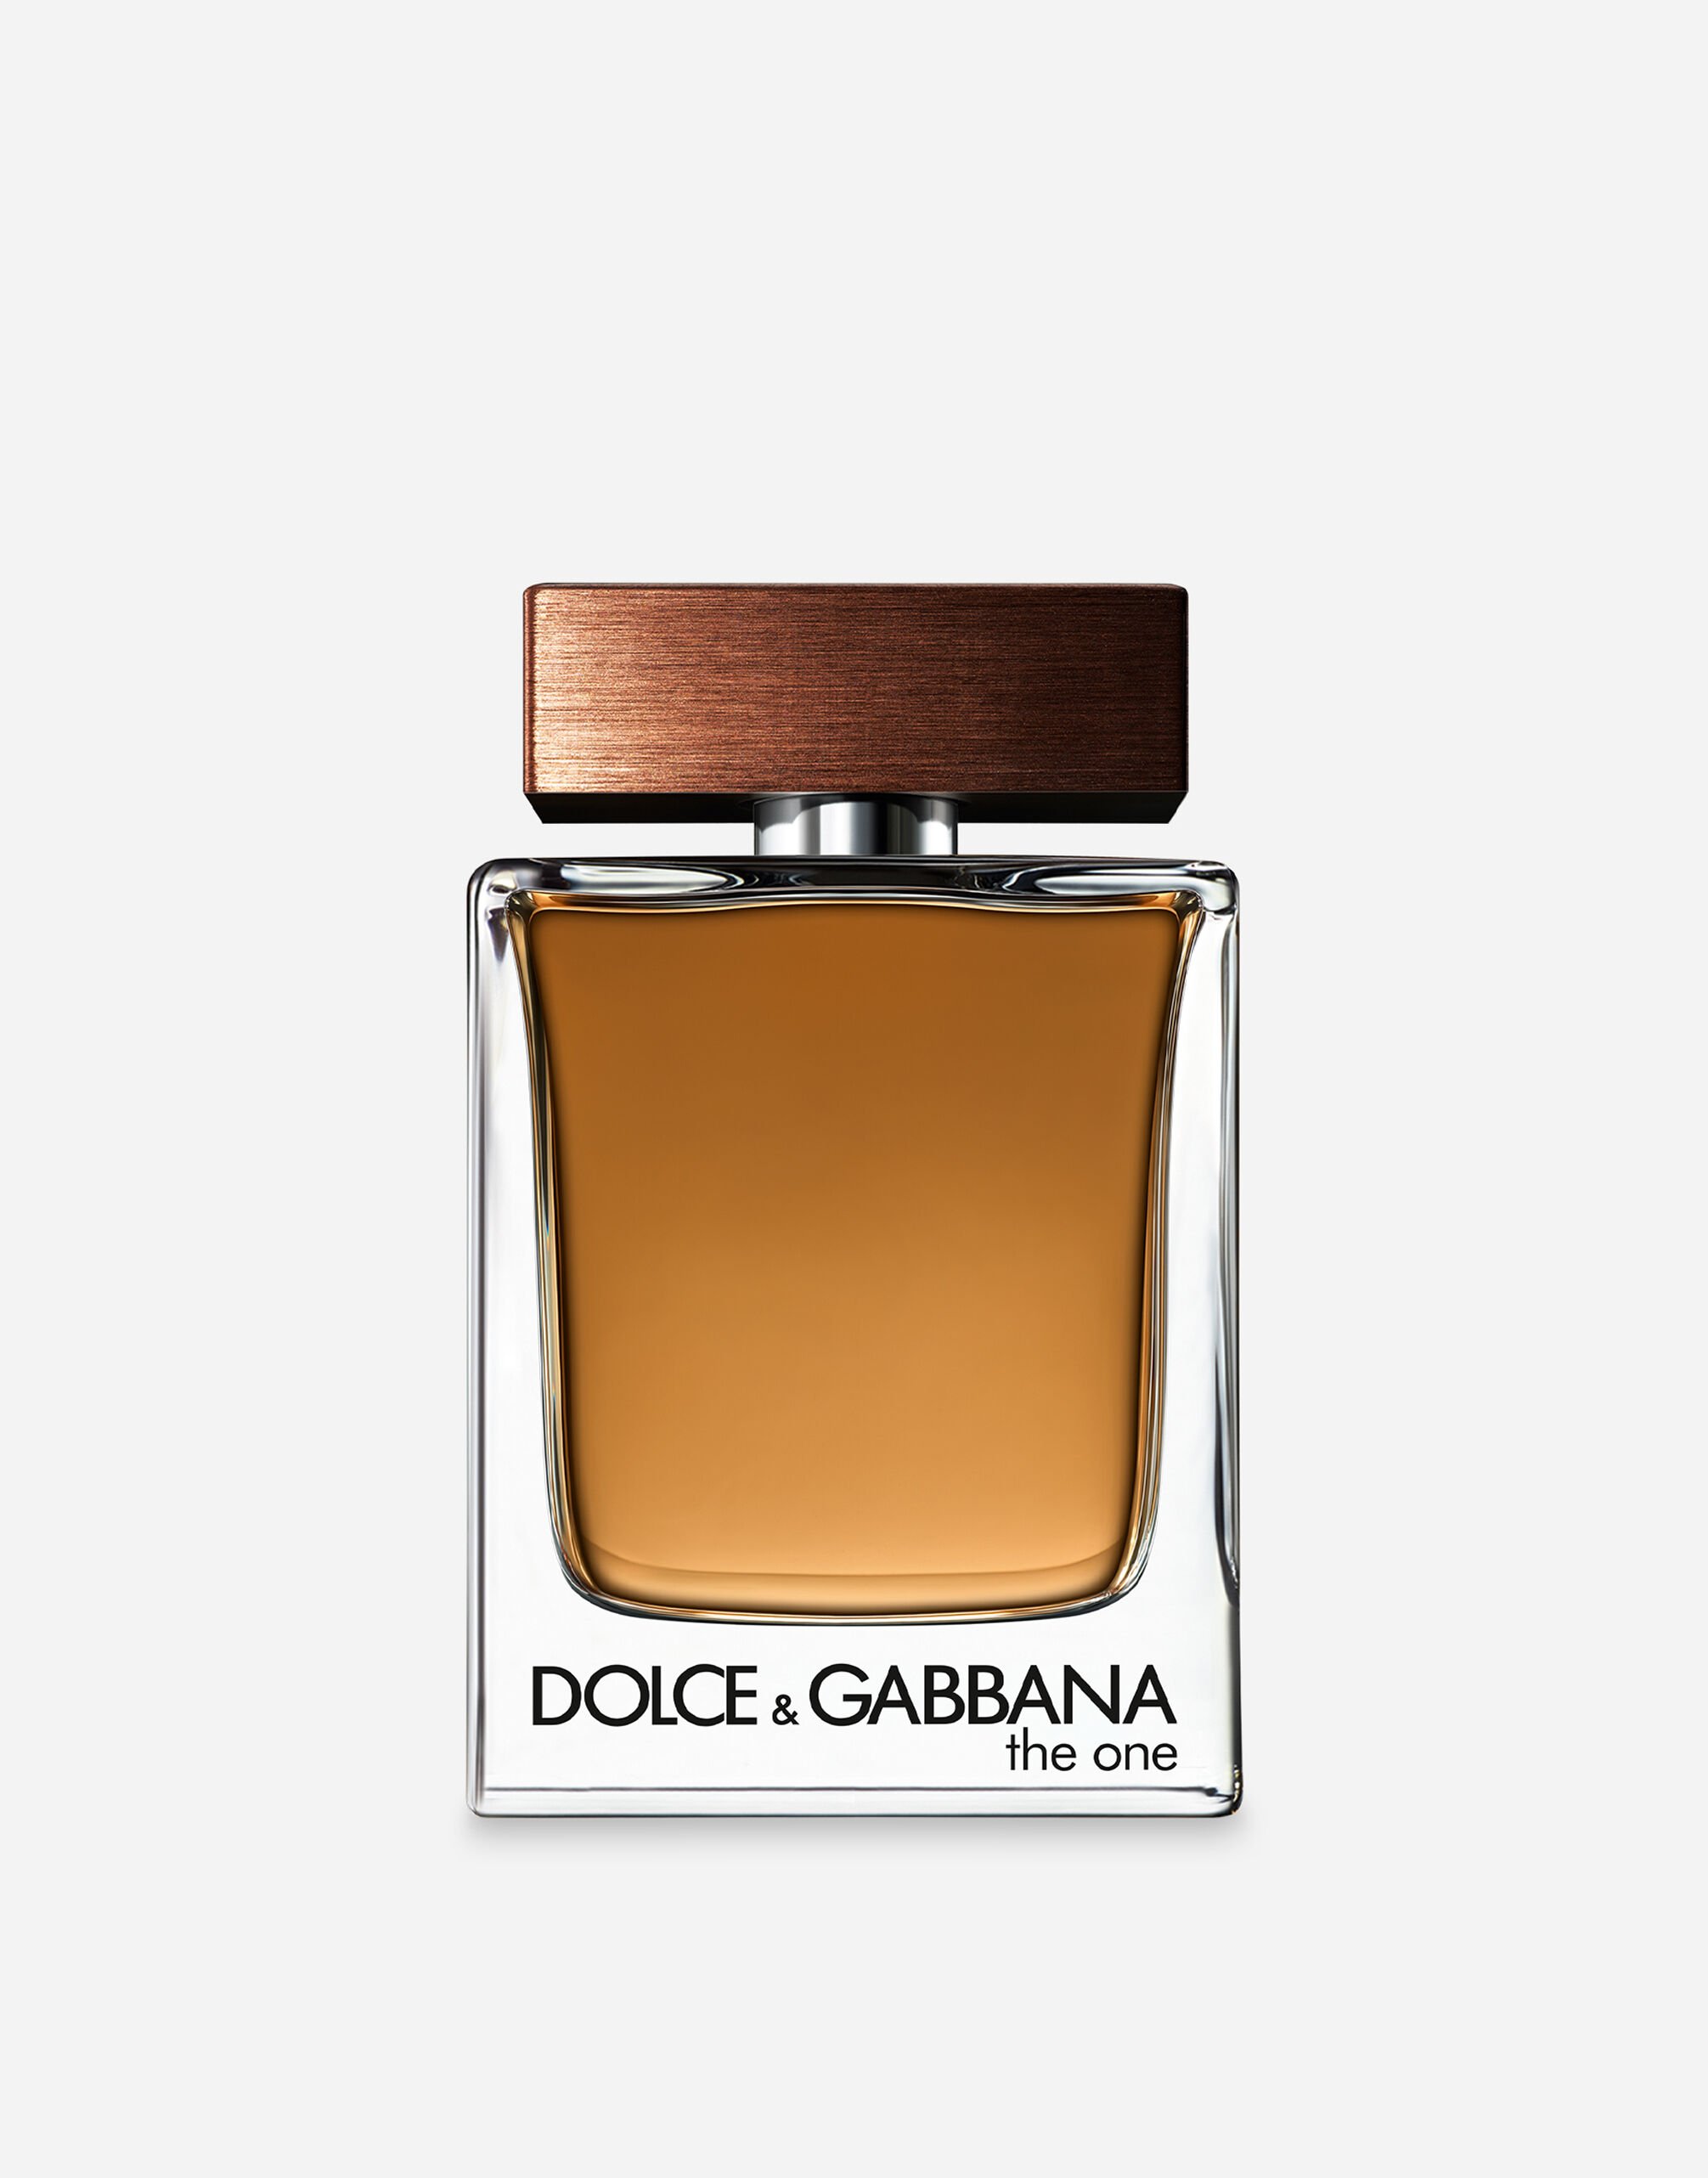 Dolce & Gabbana The One for Men Eau de Toilette - VP003HVP000